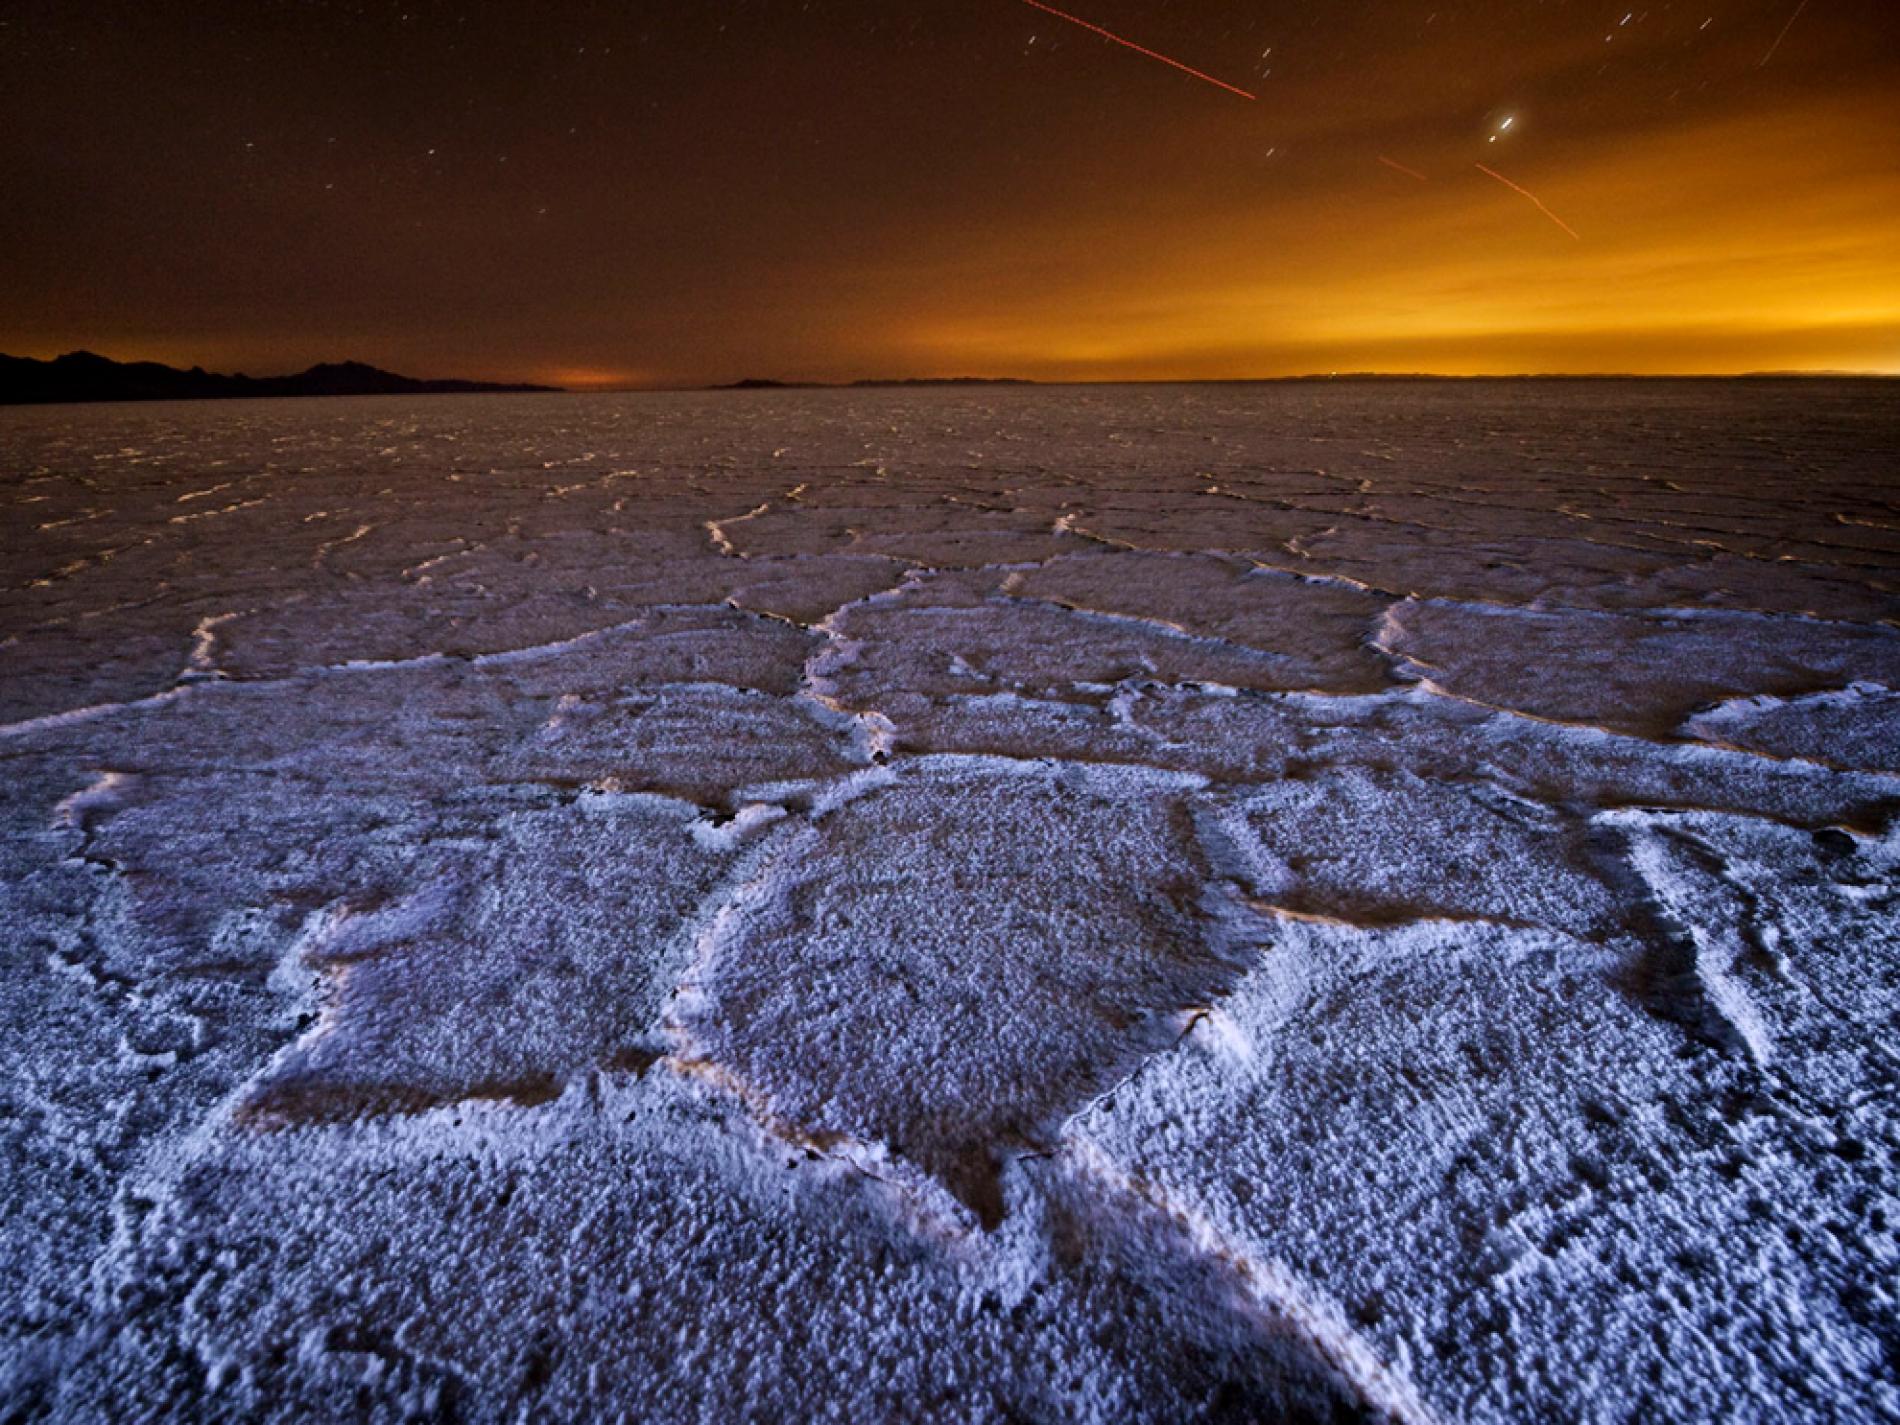 Bonneville Salt Flats at Night, Utah